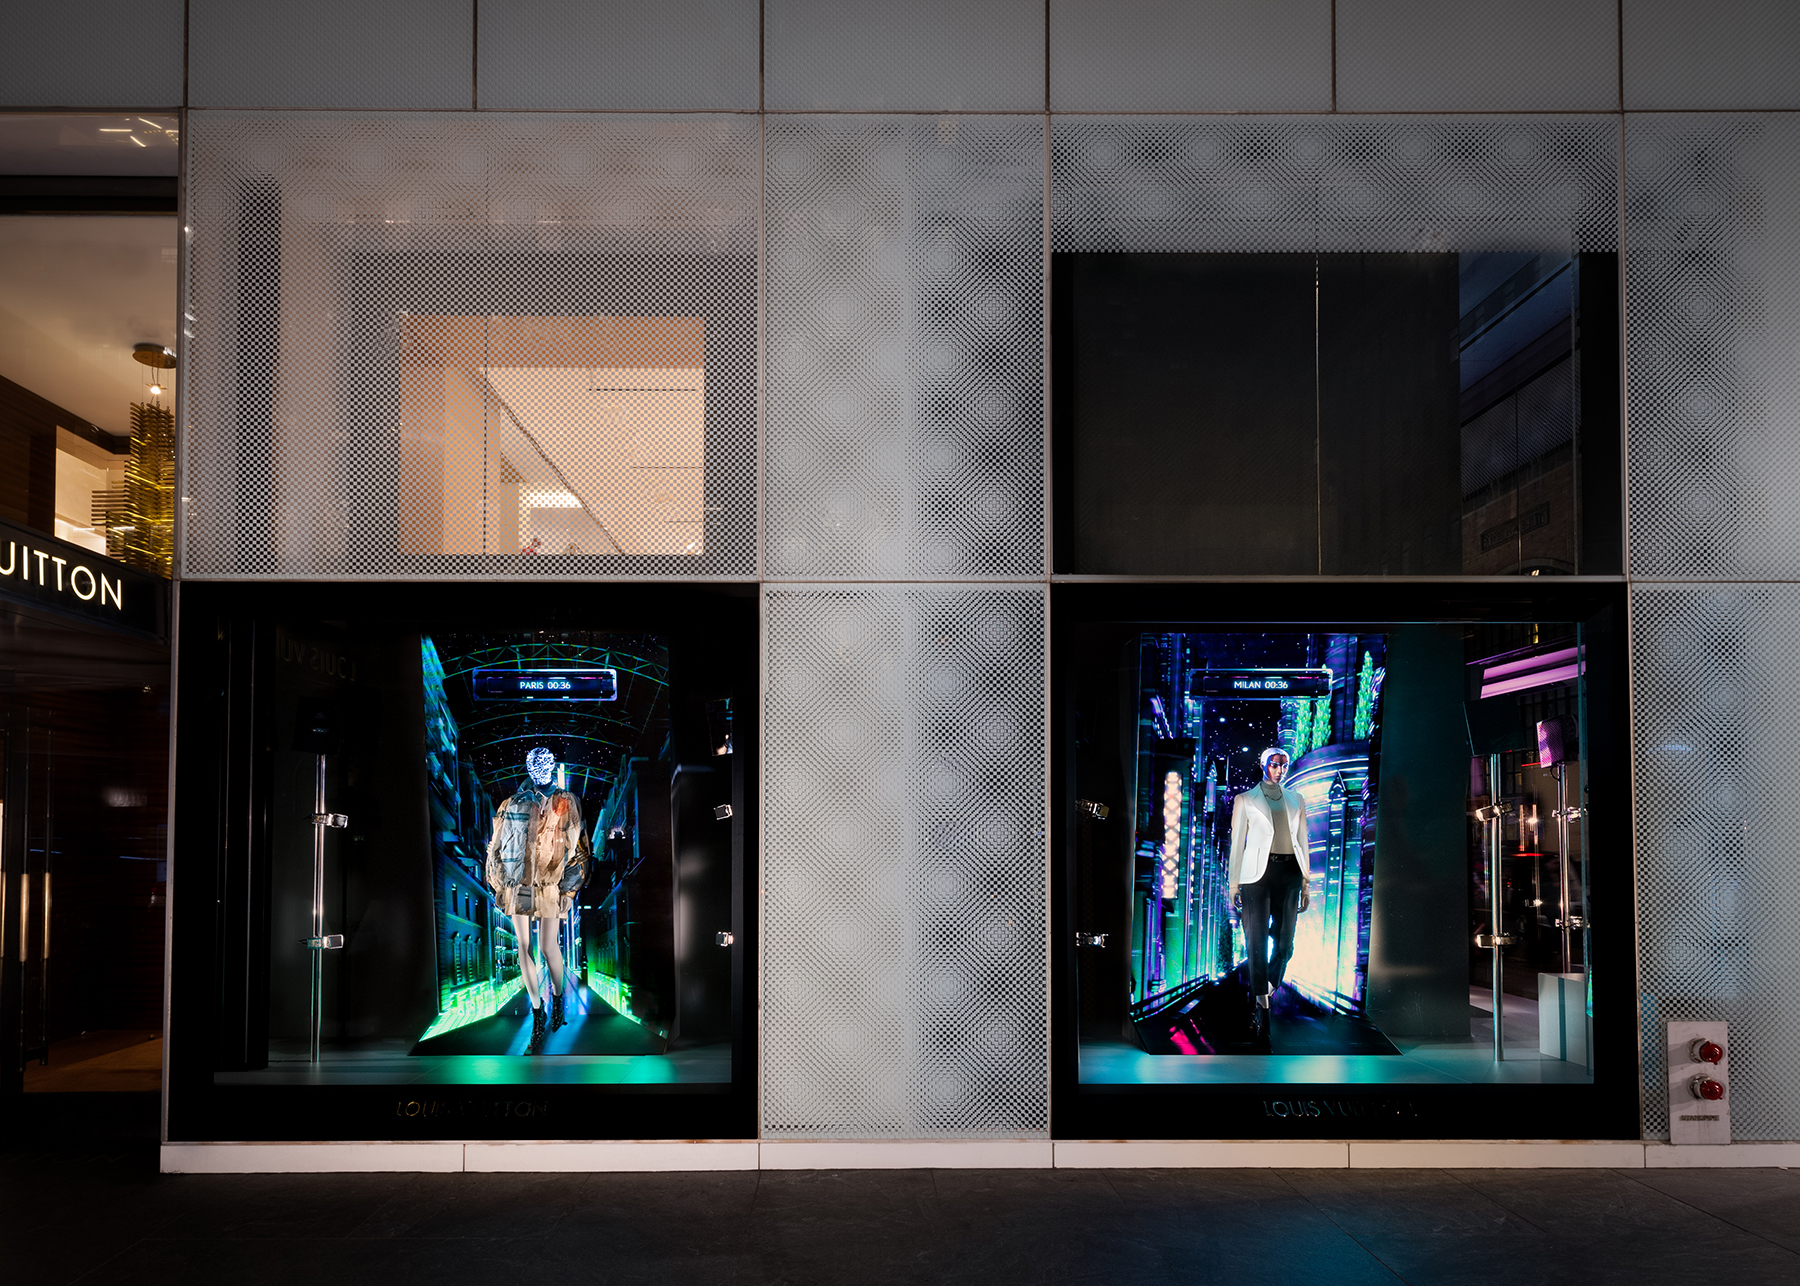 WindowsWear Shares Behind the Scenes of Louis Vuitton's Return Home to  Place Vendôme – WindowsWear